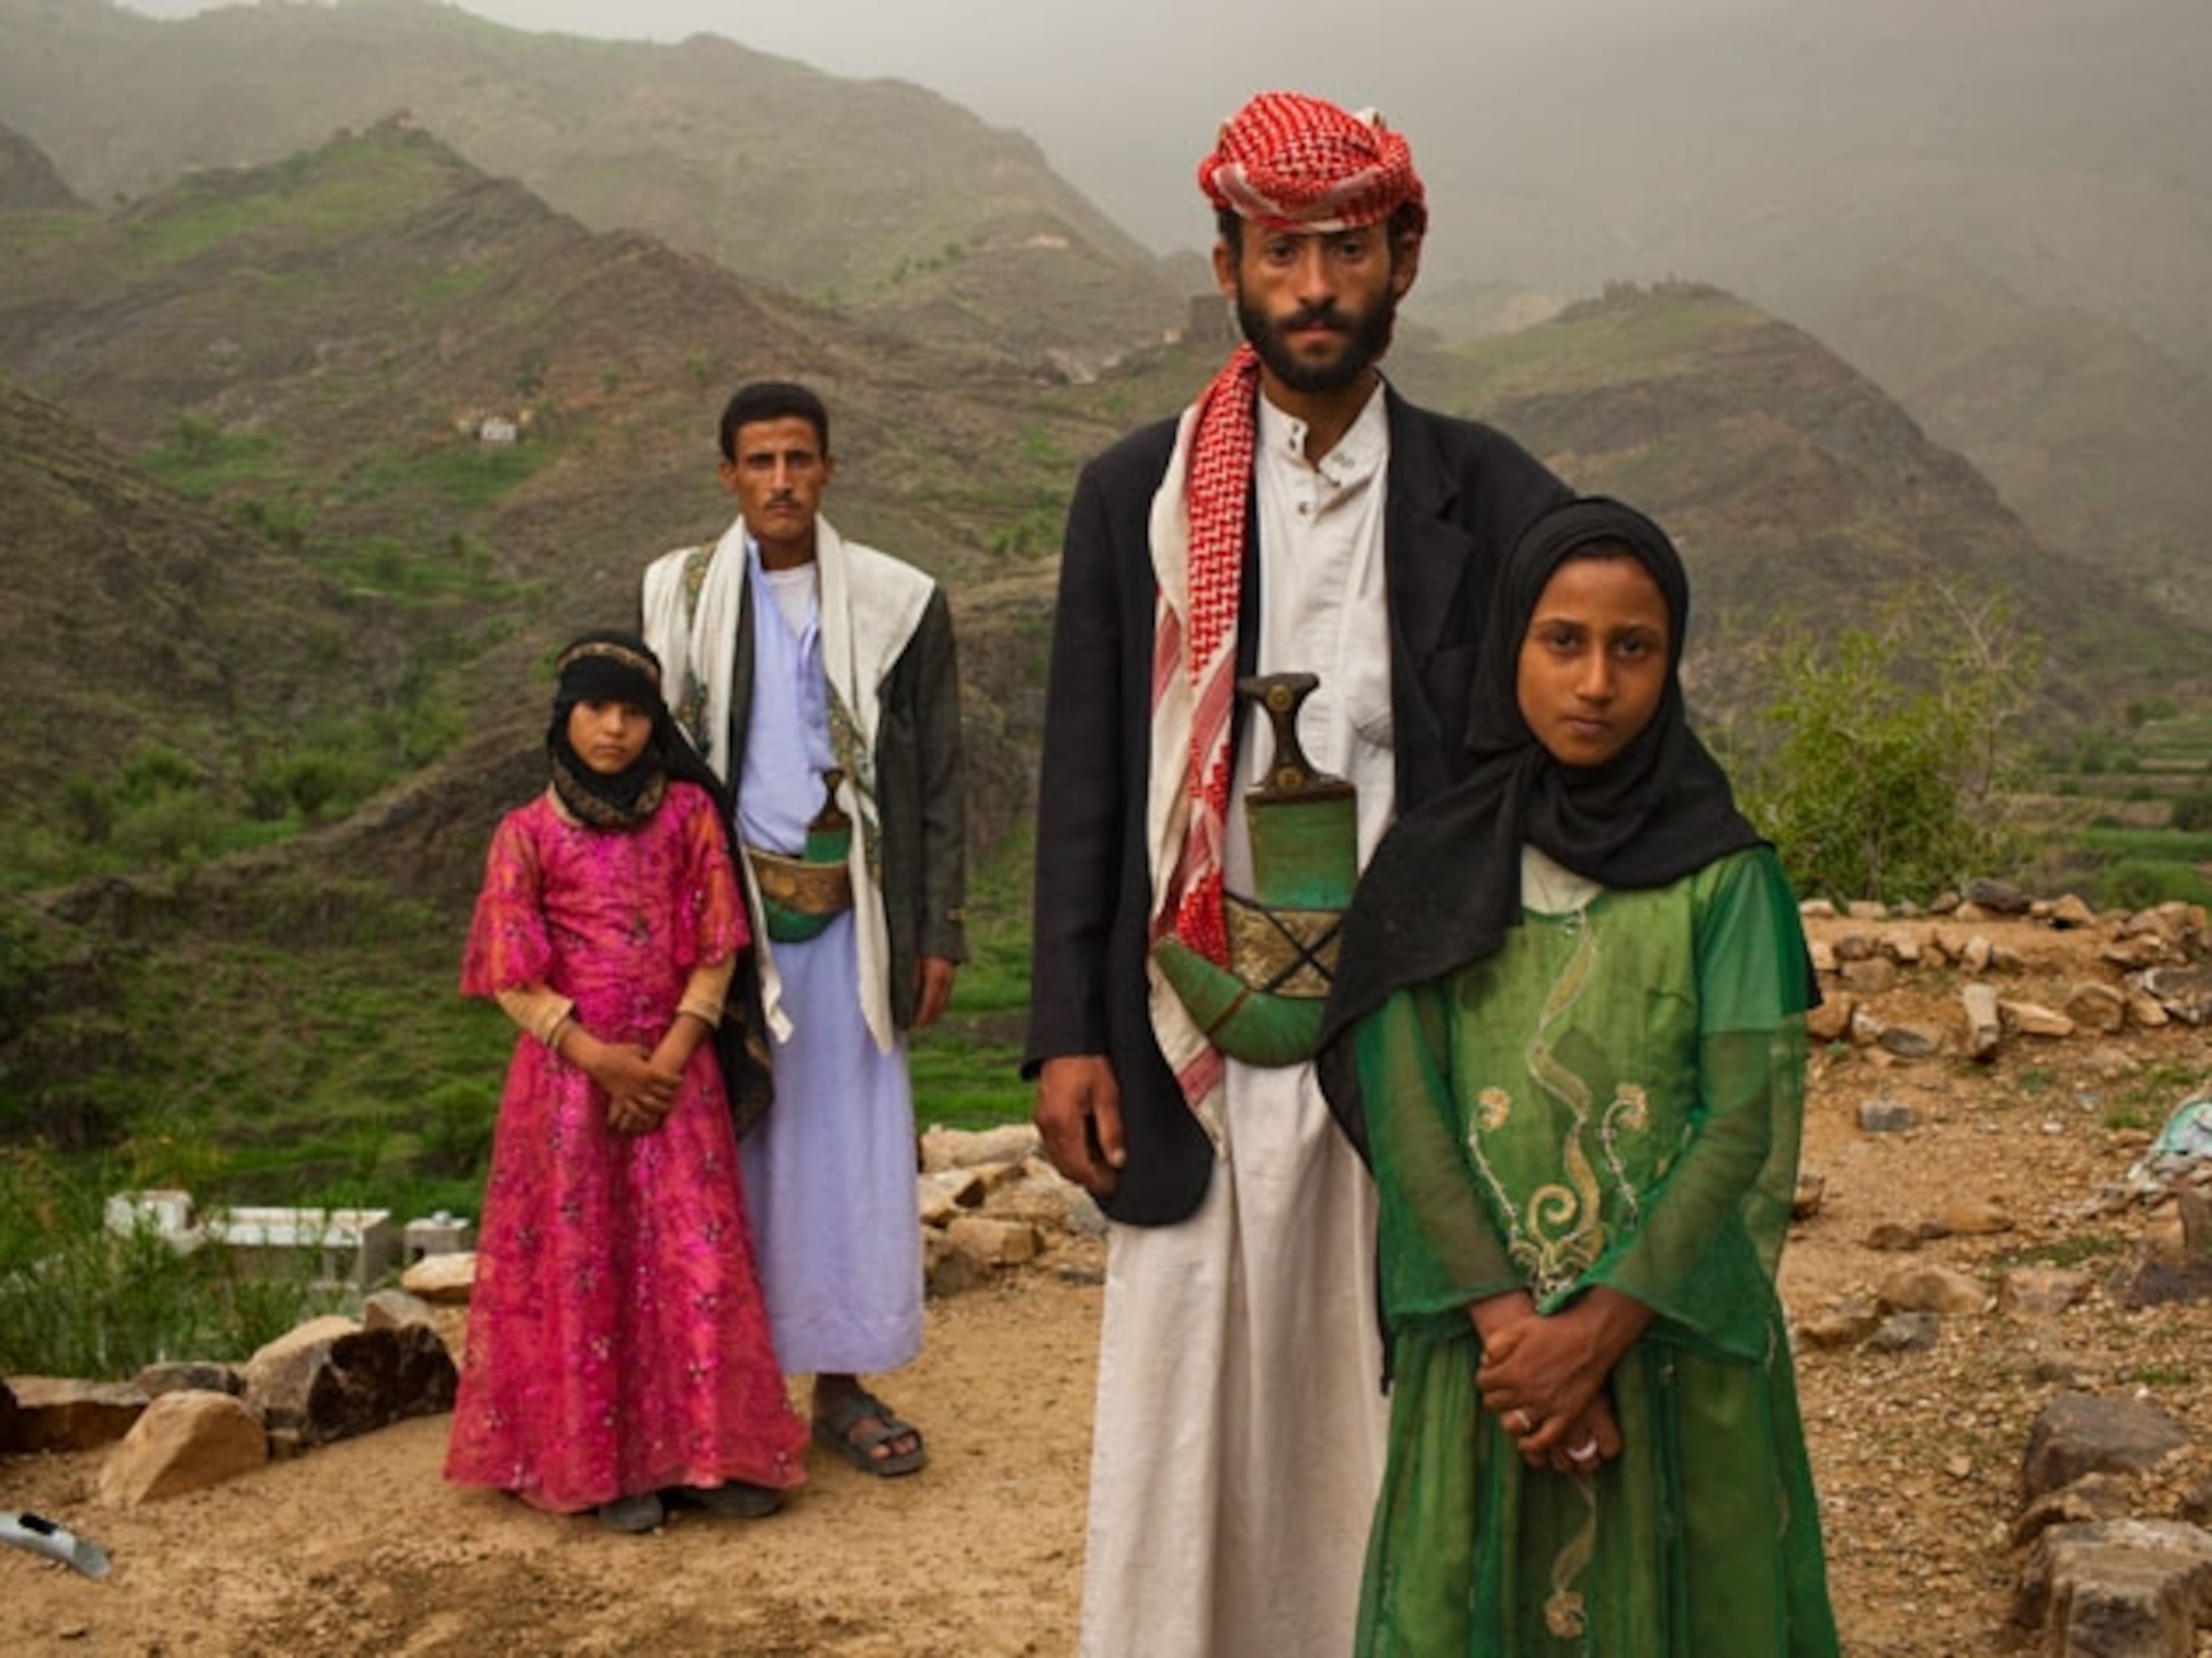 02-child-bride-husband-yemen-714_4x3.jpg